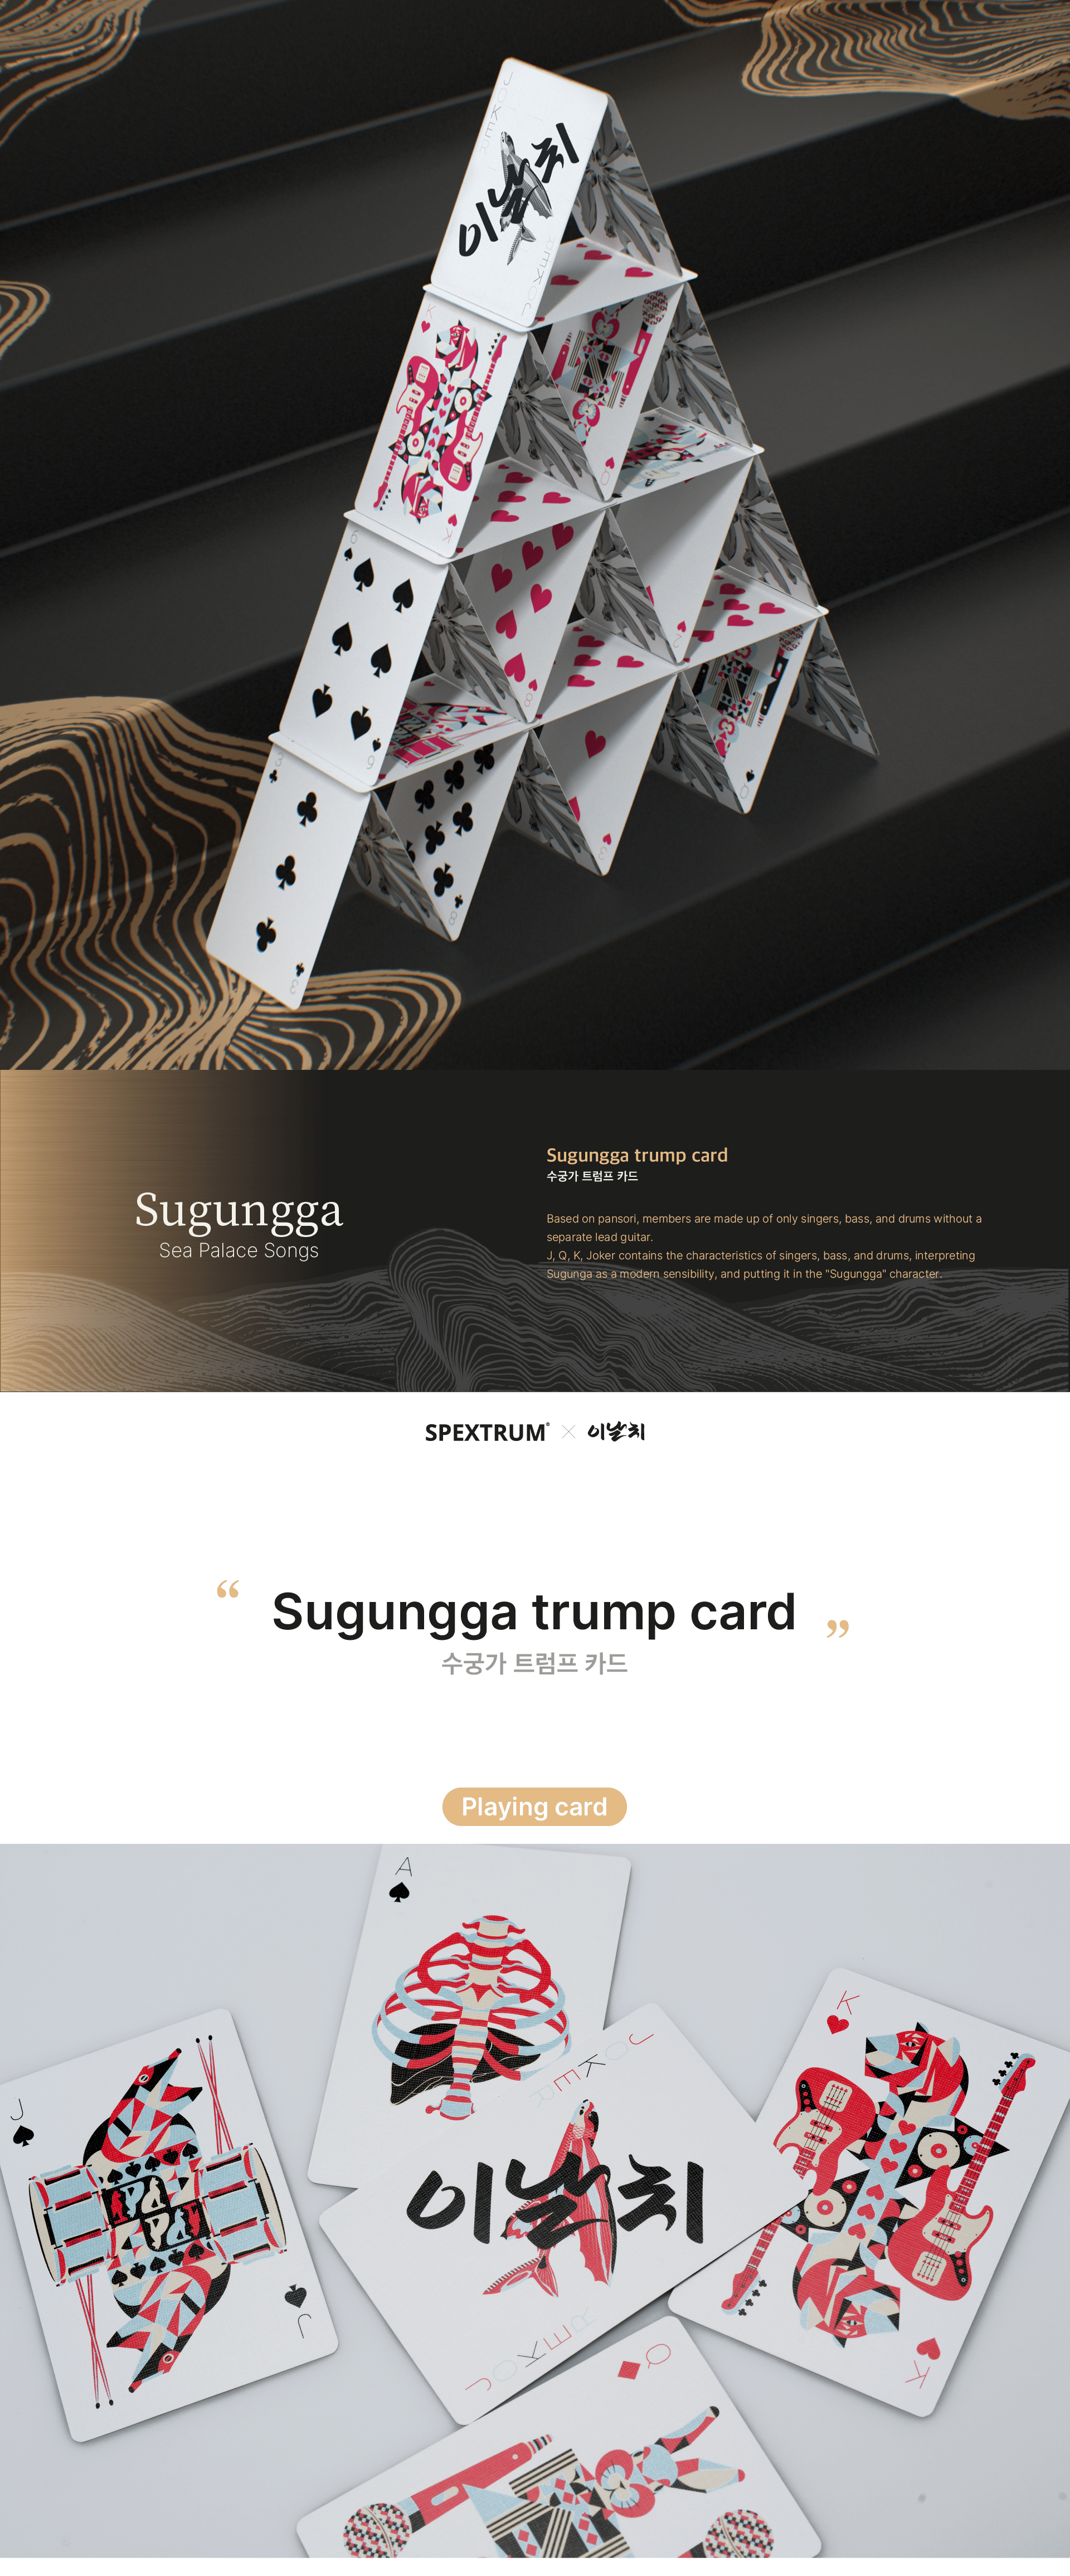 Card trump ‘Trump card’